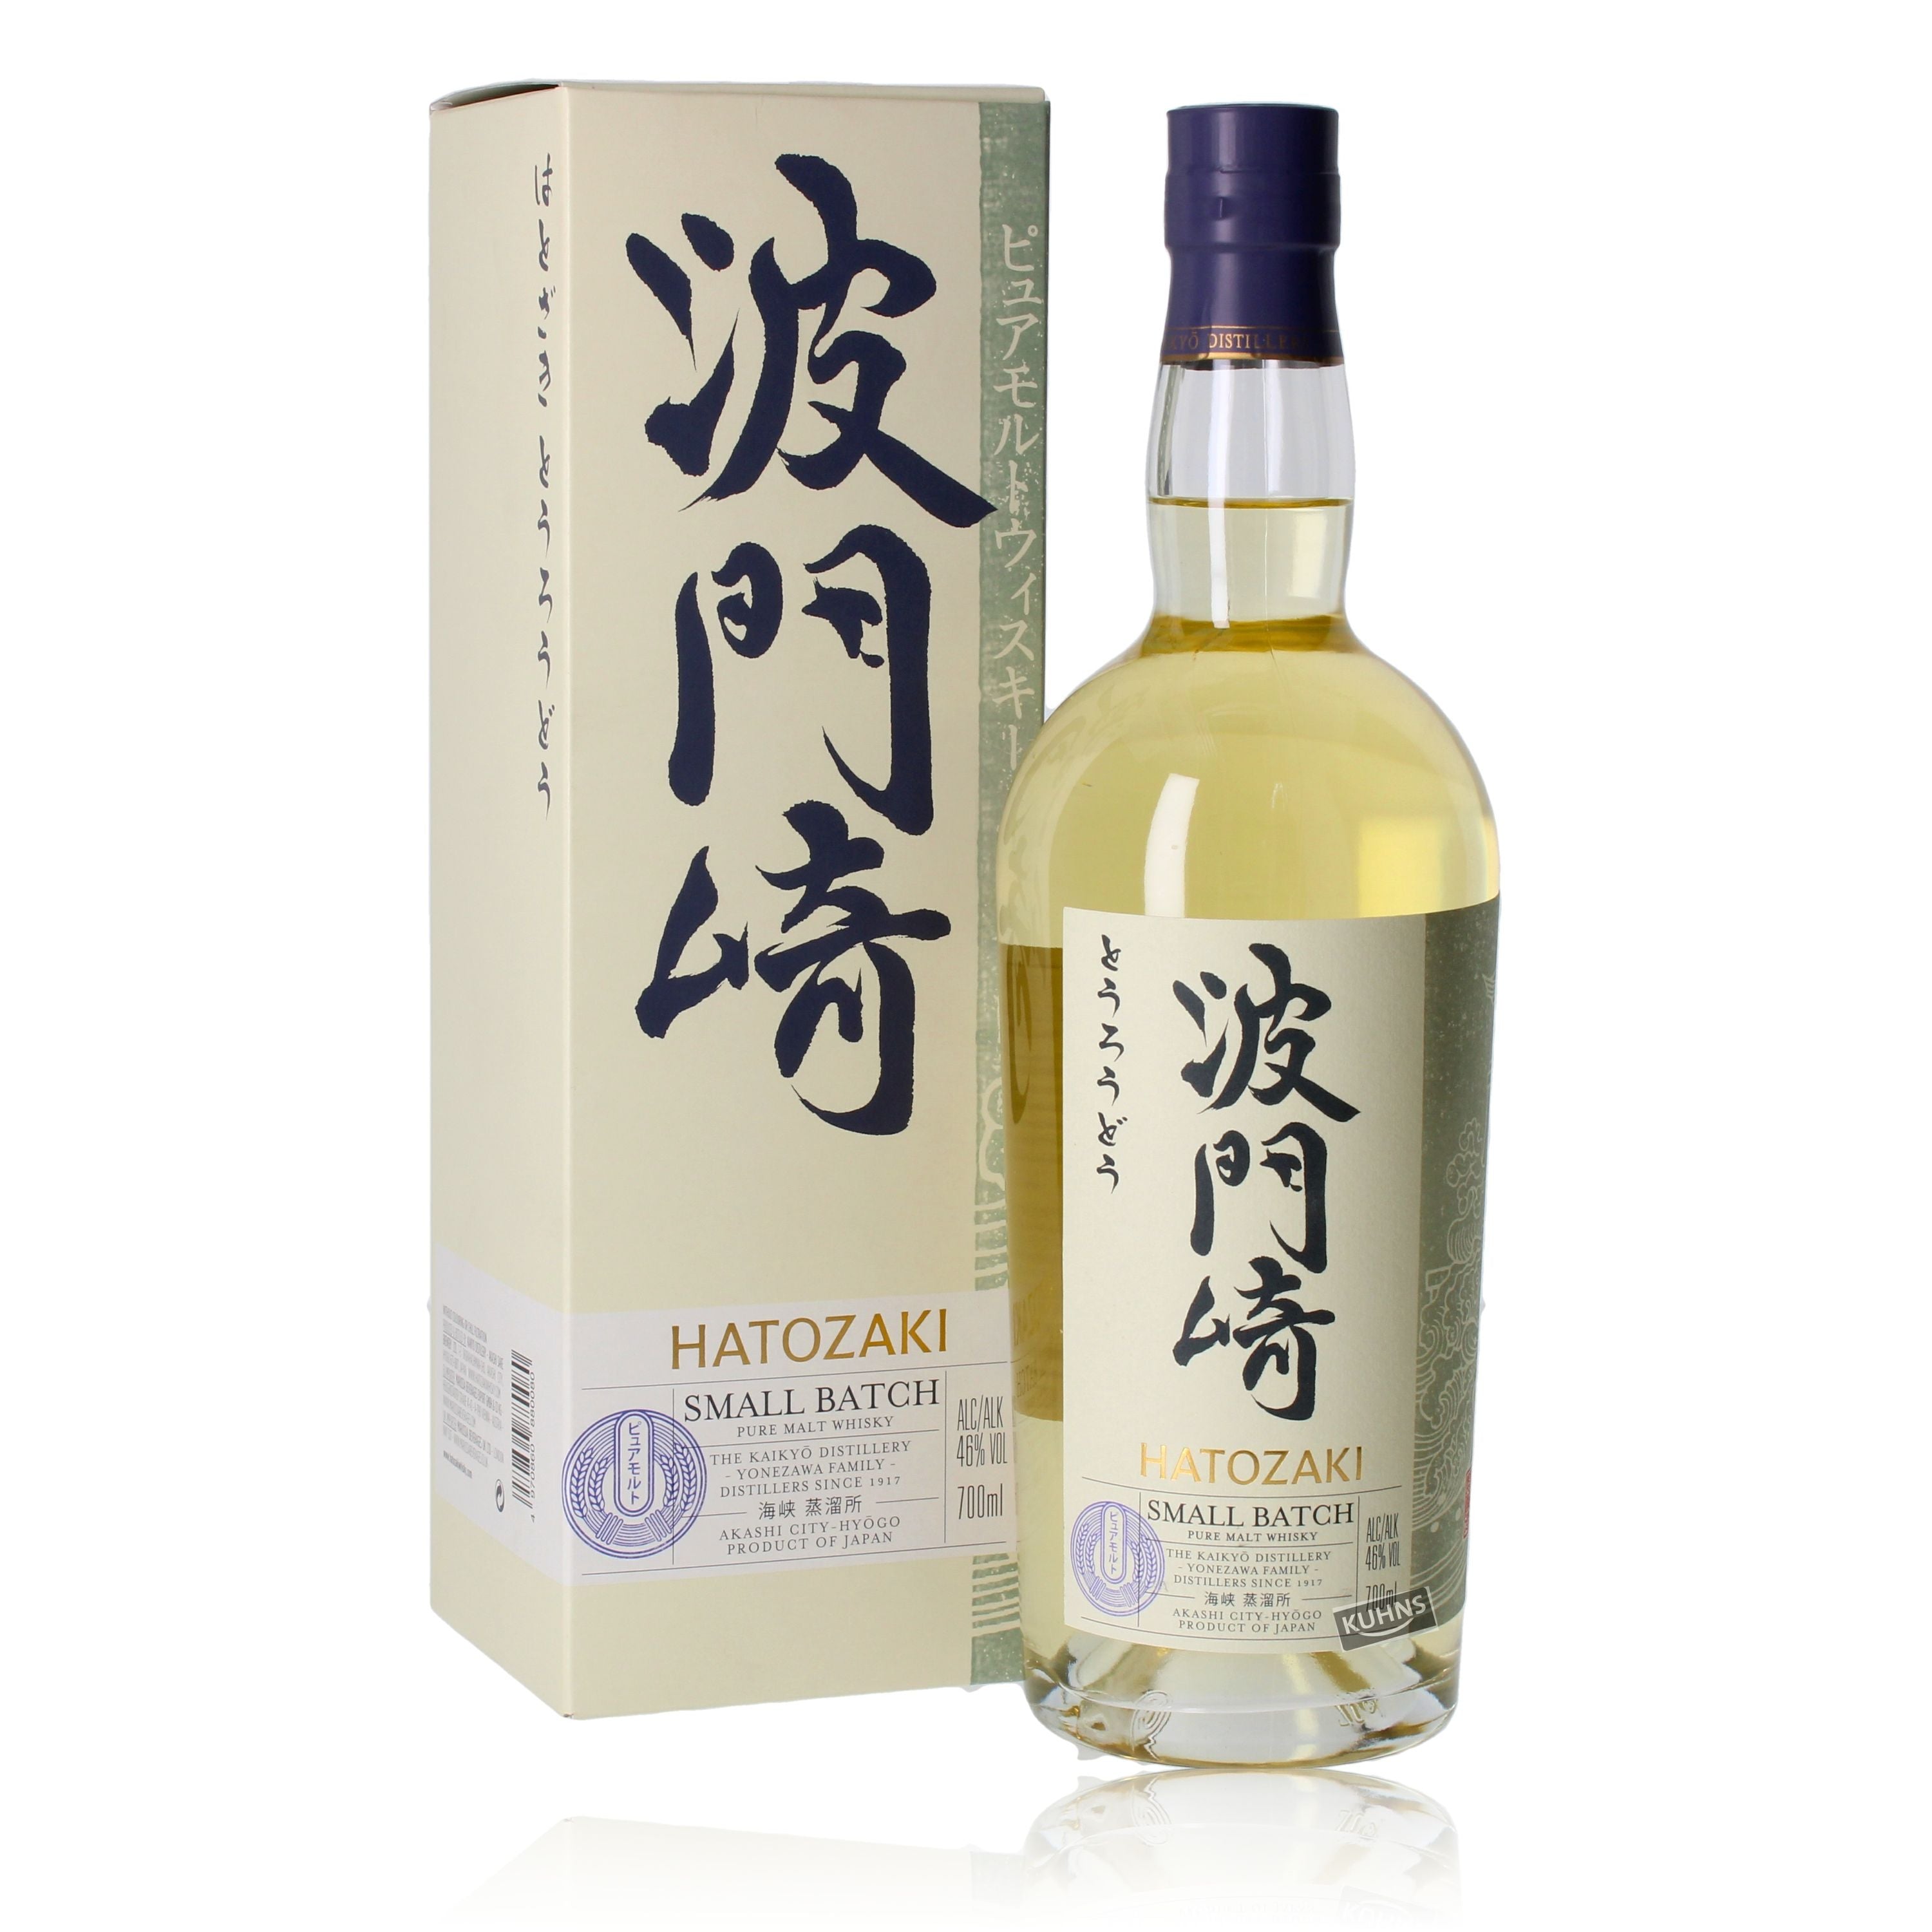 Hatozaki Pure Malt Small Batch Blended Japanese Whiskey 0.7l, alc. 46% by volume